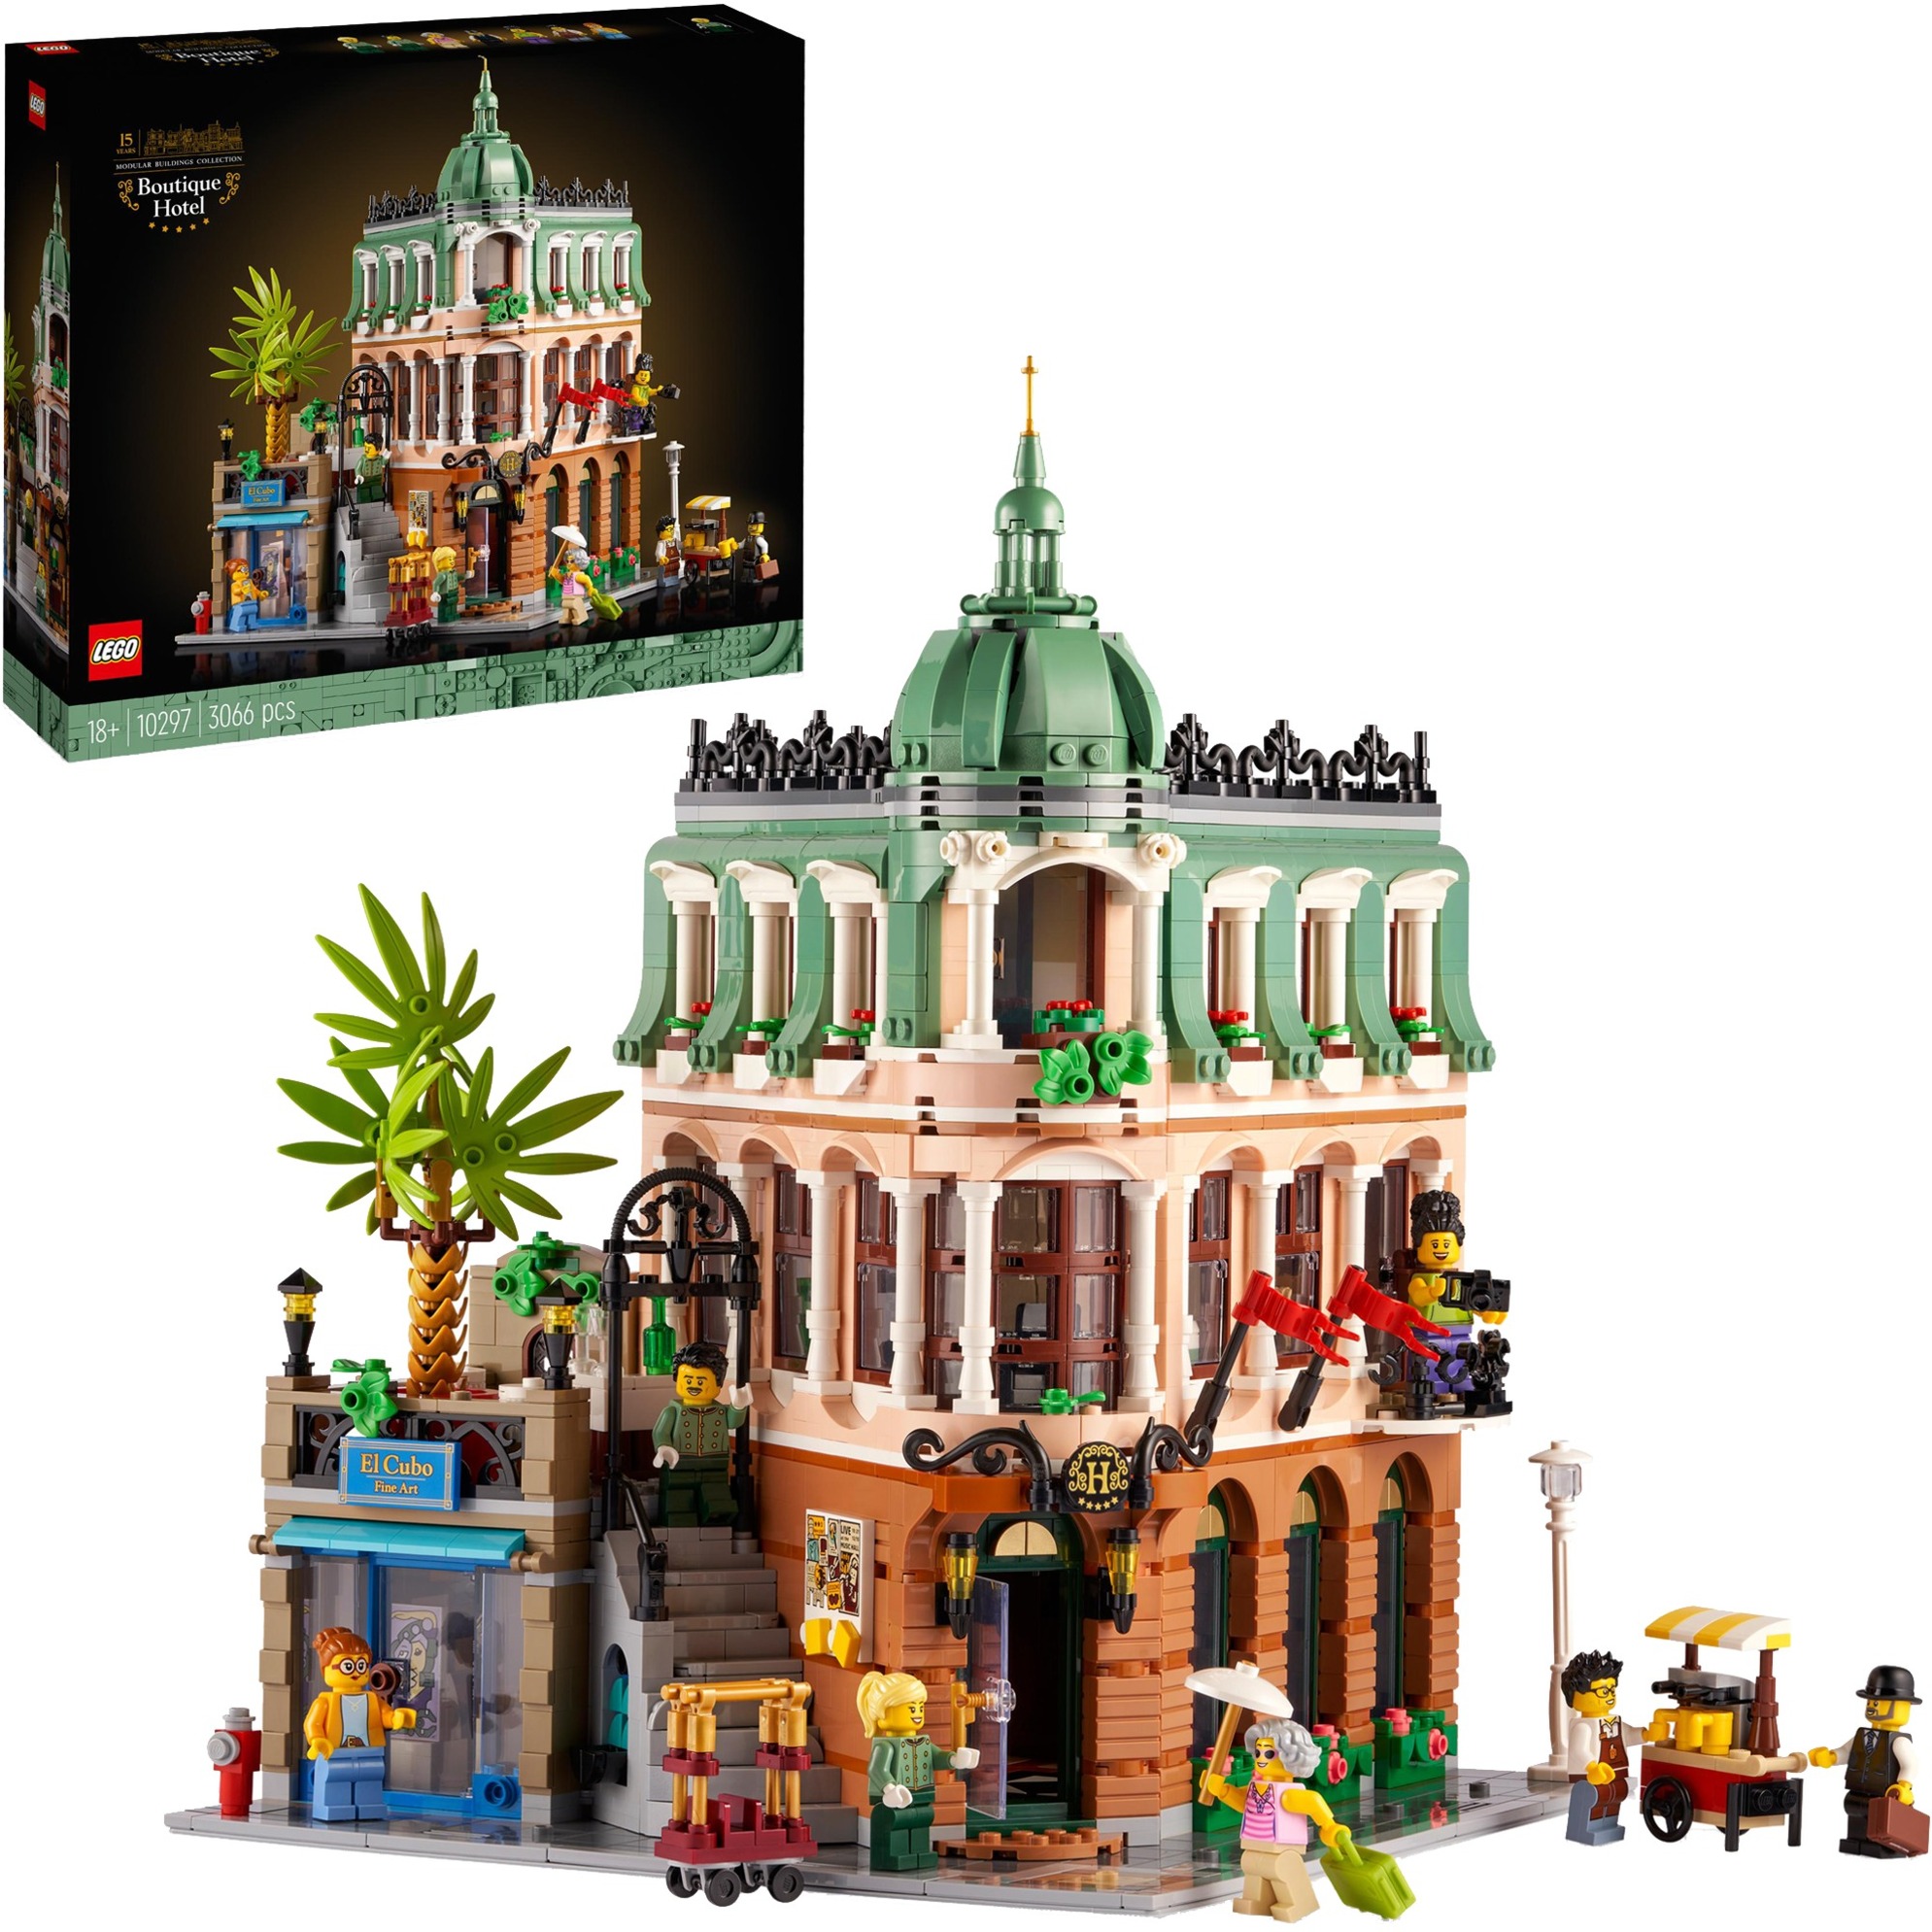 Spielzeug: Lego 10297 Creator Expert Boutique-Hotel